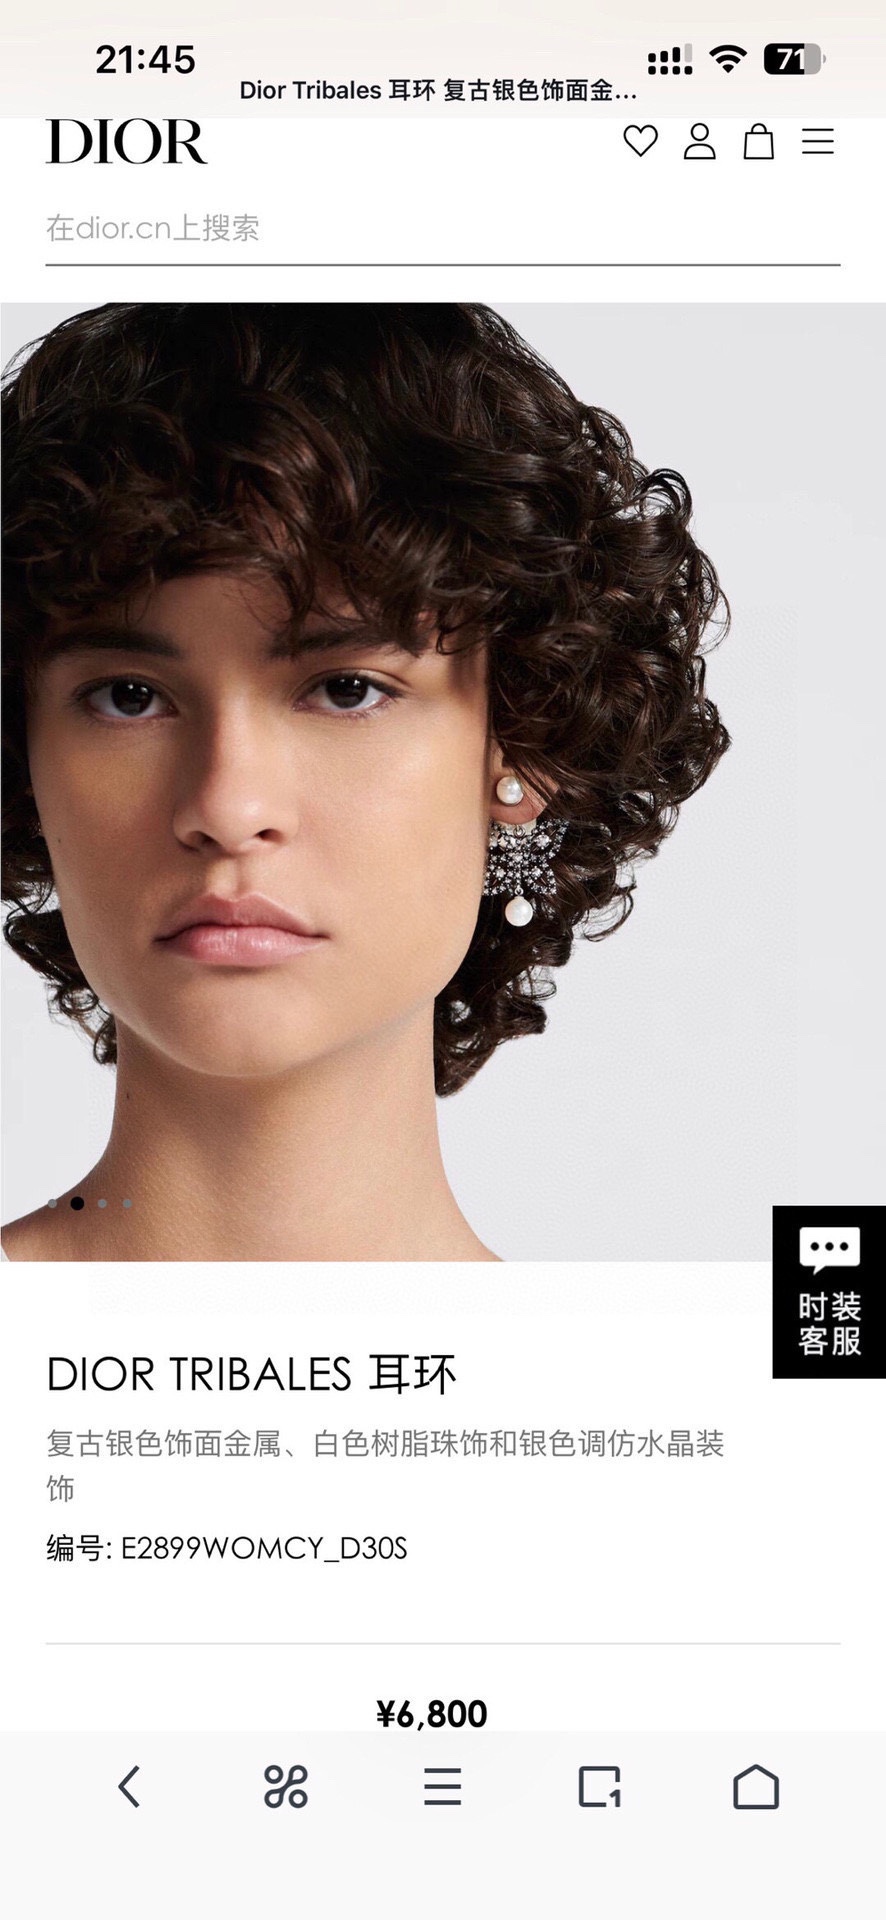 ️迪奥新款一线大牌都爱的Dior迪奥新品字母CD耳环金属质感逆袭版字母潮范儿抢风头完全胜任现代年轻人街拍